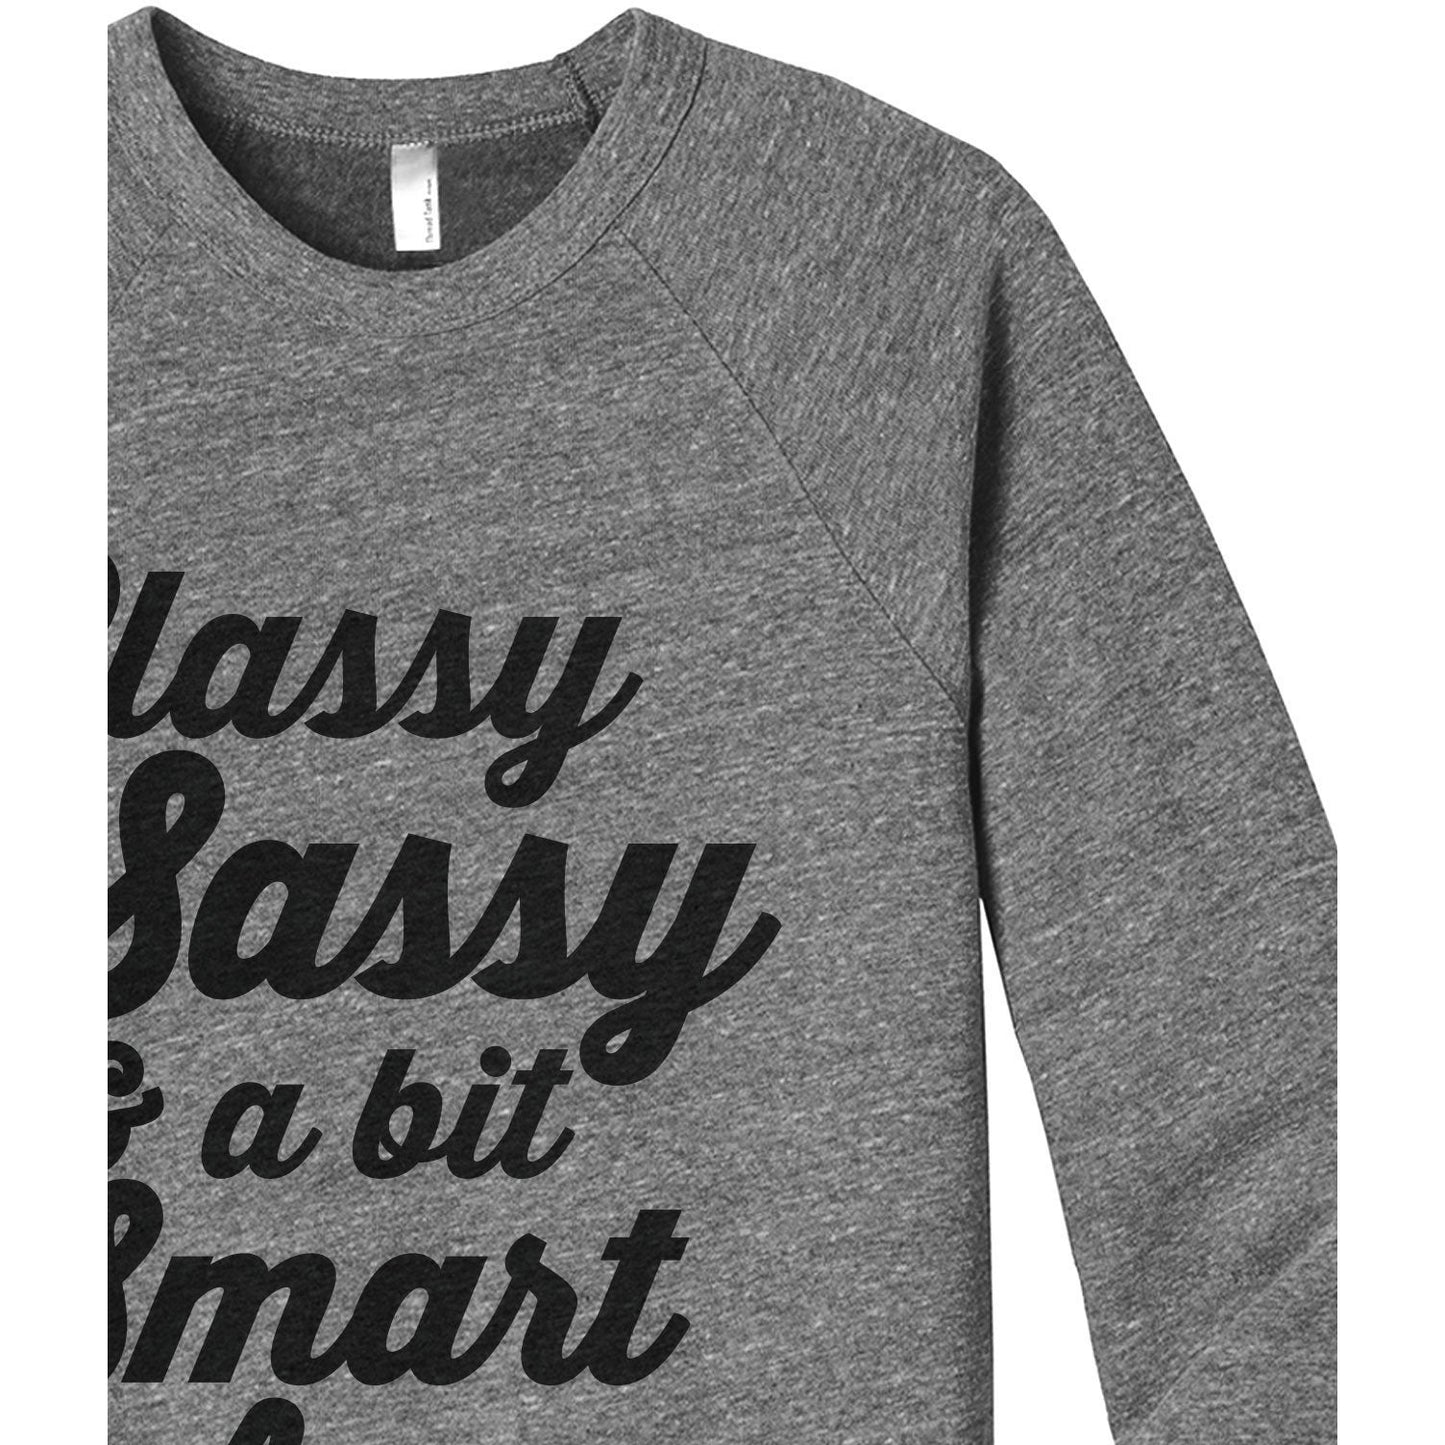 Classy Sassy and A Bit Smart Assy Women's Cozy Fleece Longsleeves Sweater Heather Grey Closeup Details